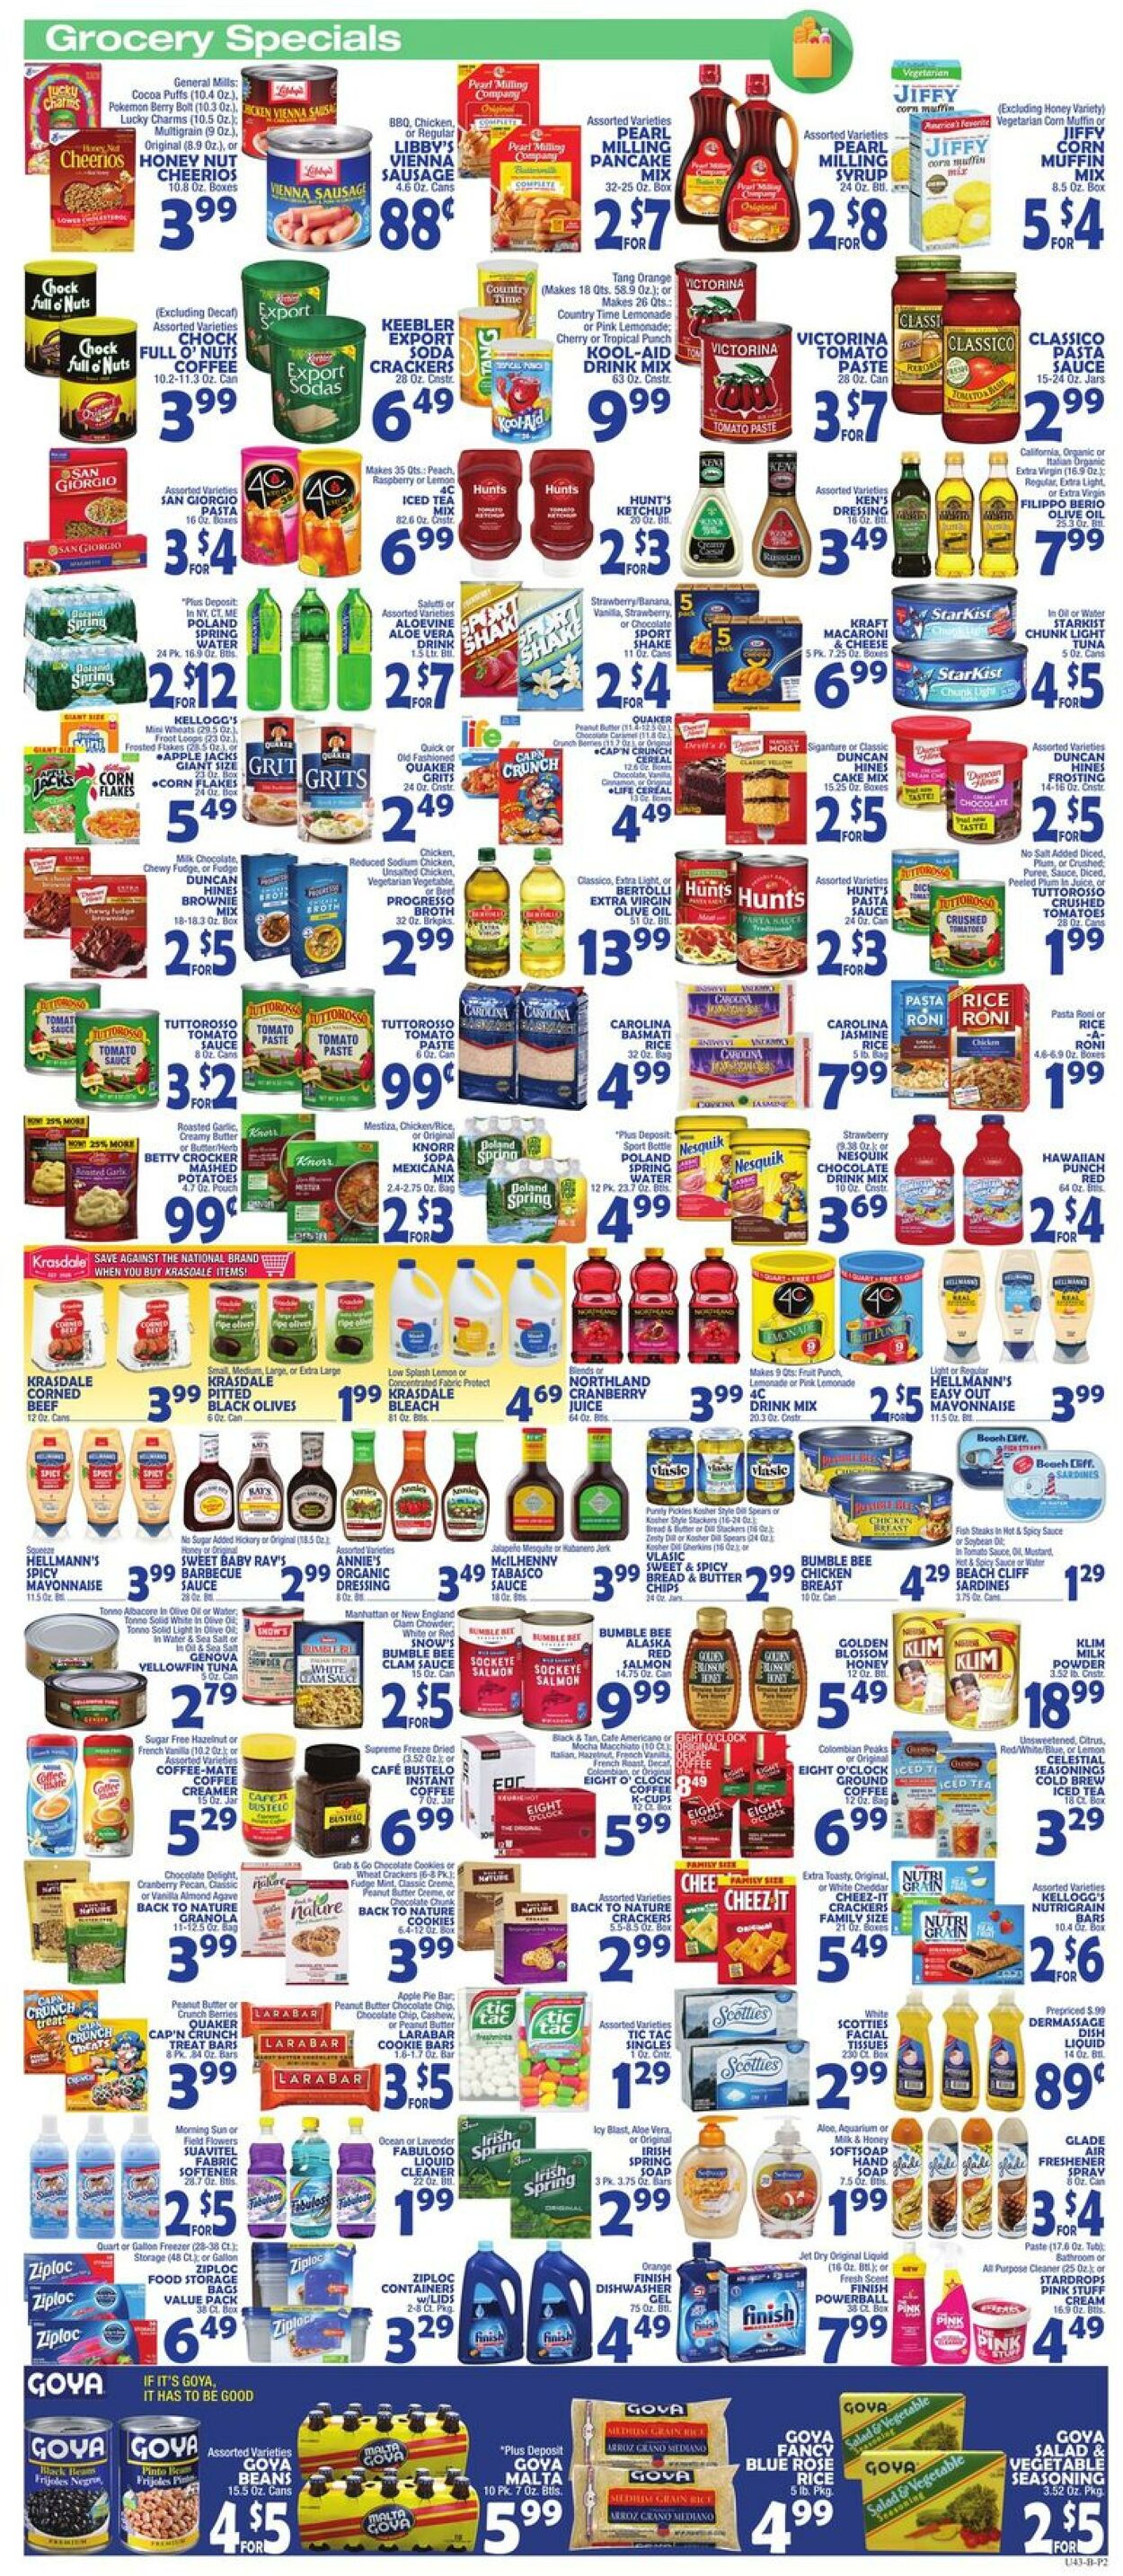 Weekly ad Bravo Supermarkets 06/17/2022 - 06/23/2022